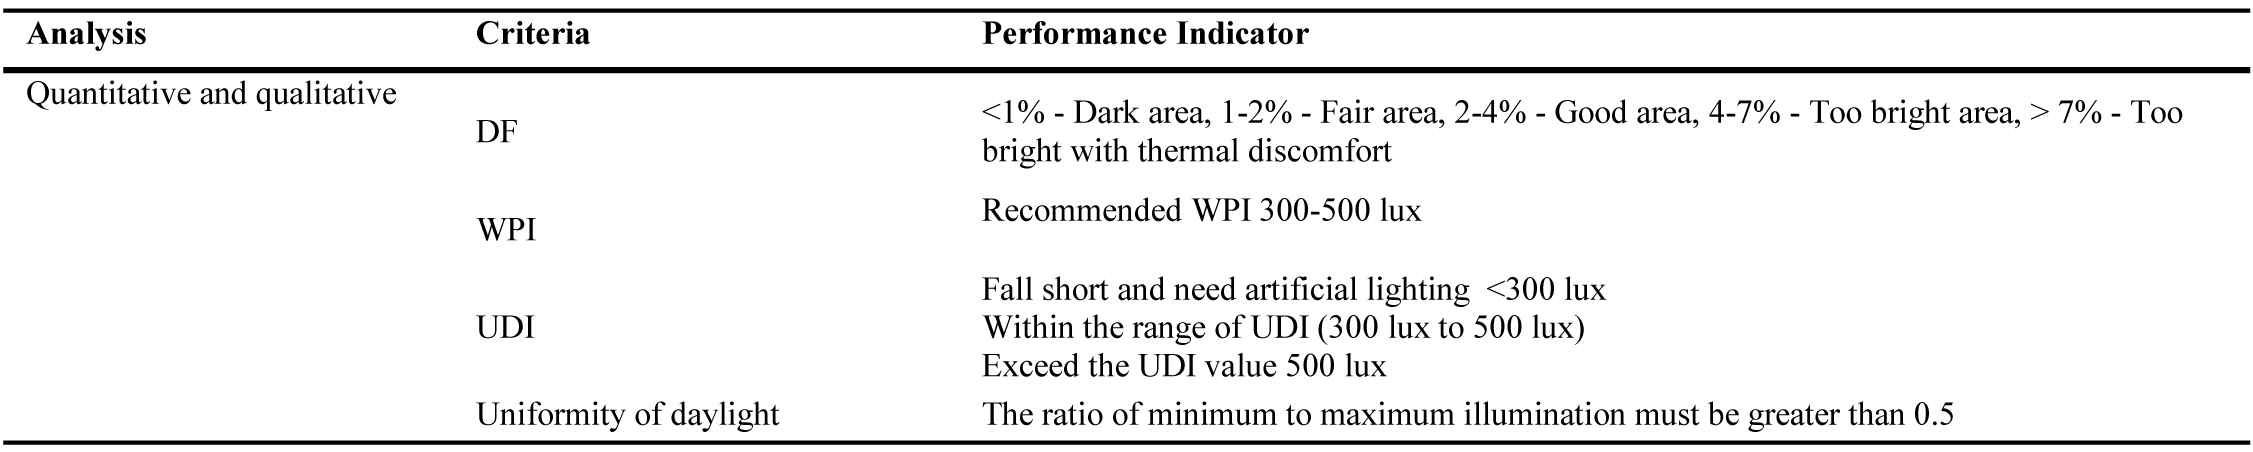 Summary of Performance Indicator Criteria for Daylight Simulation Experiment (AFE, PROMOTELEC).